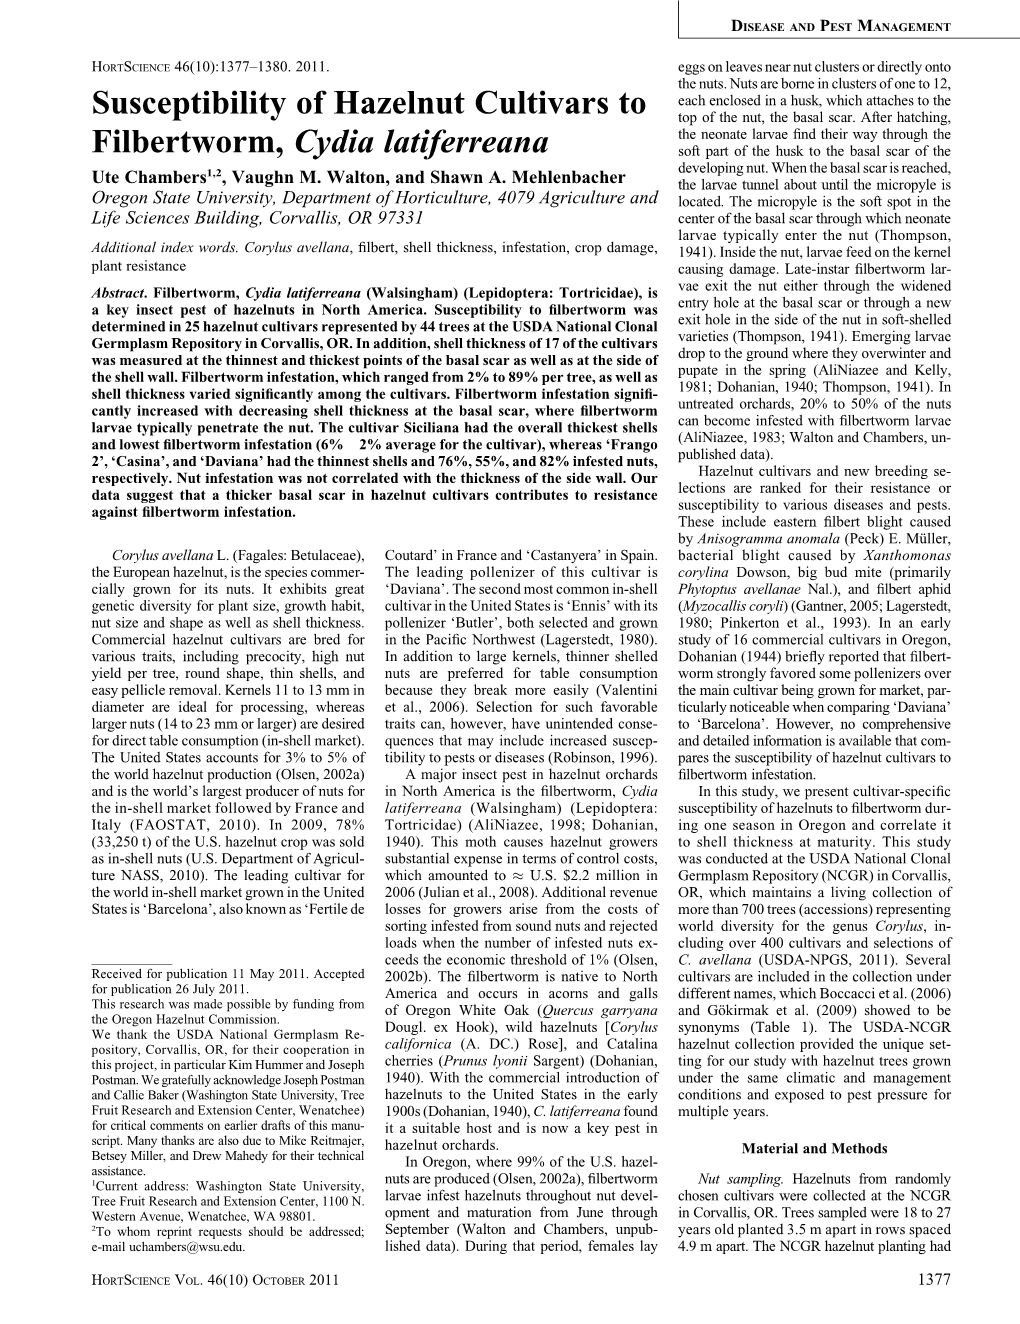 Susceptibility of Hazelnut Cultivars to Filbertworm, Cydia Latiferreana